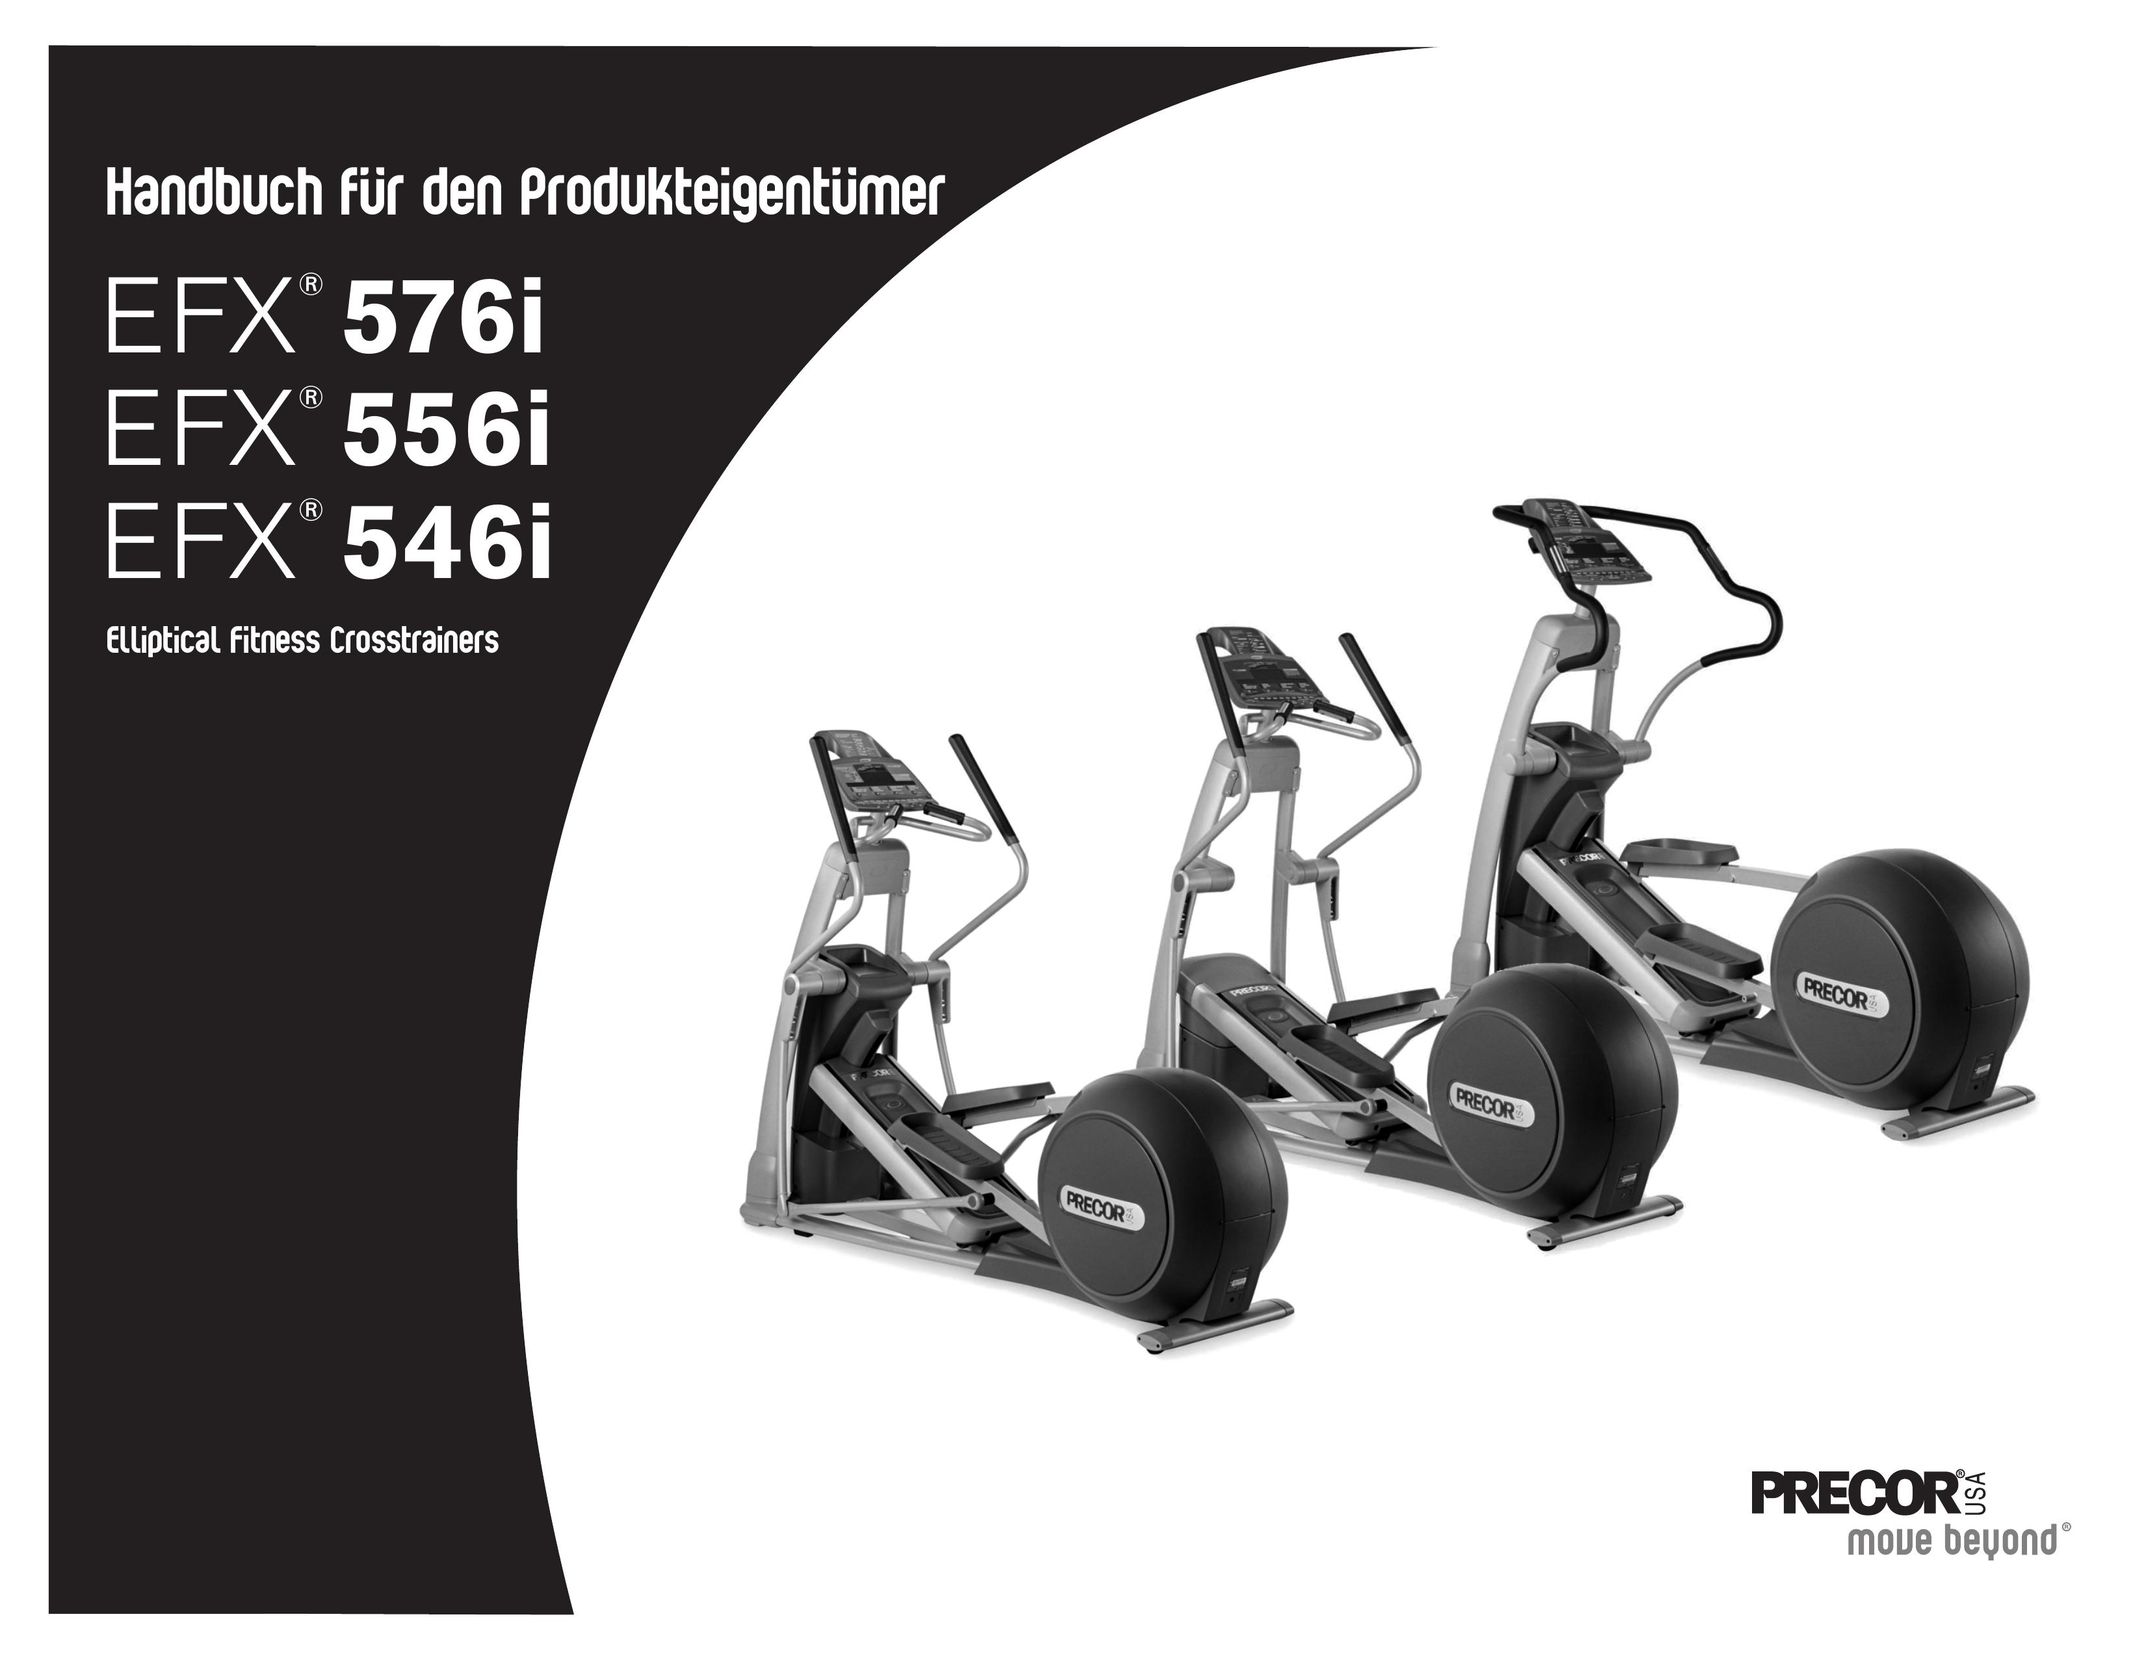 Precor EFX 546I Exercise Bike User Manual